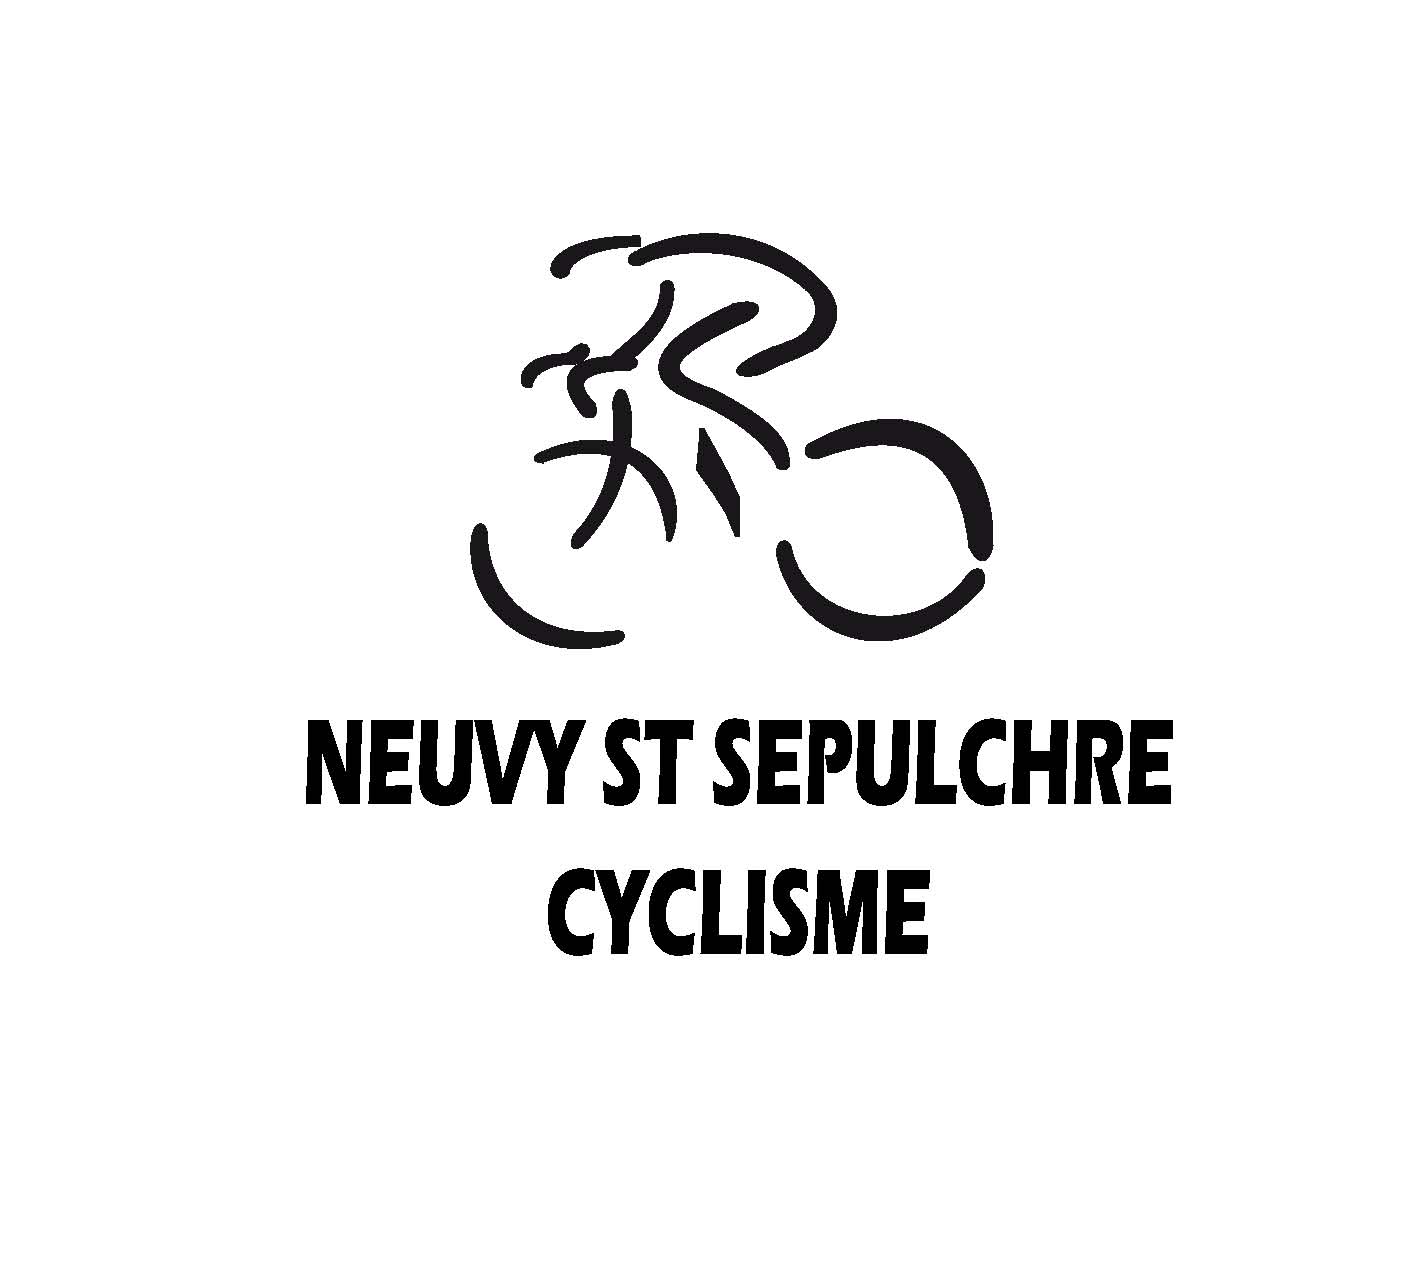 Neuvy cyclisme logo